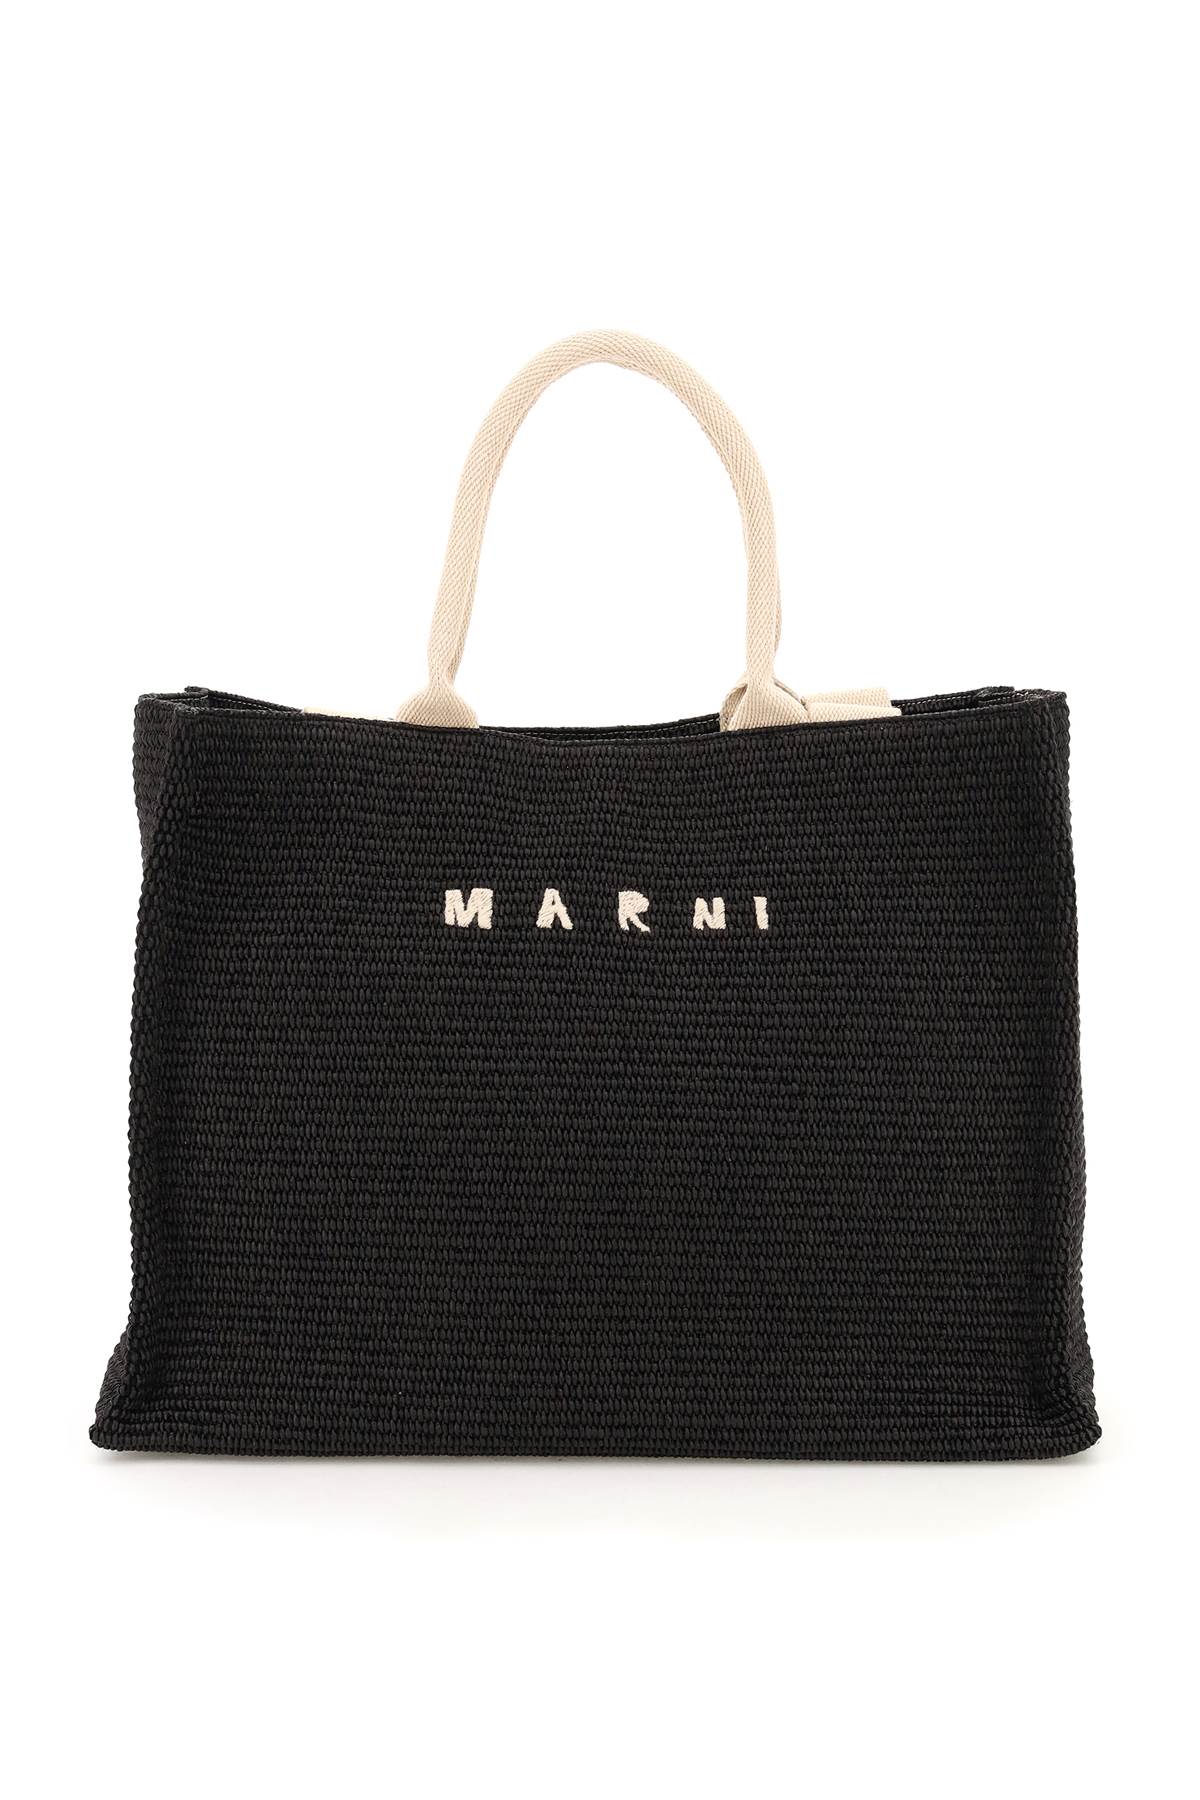 Marni Raffia Large Shopping Bag